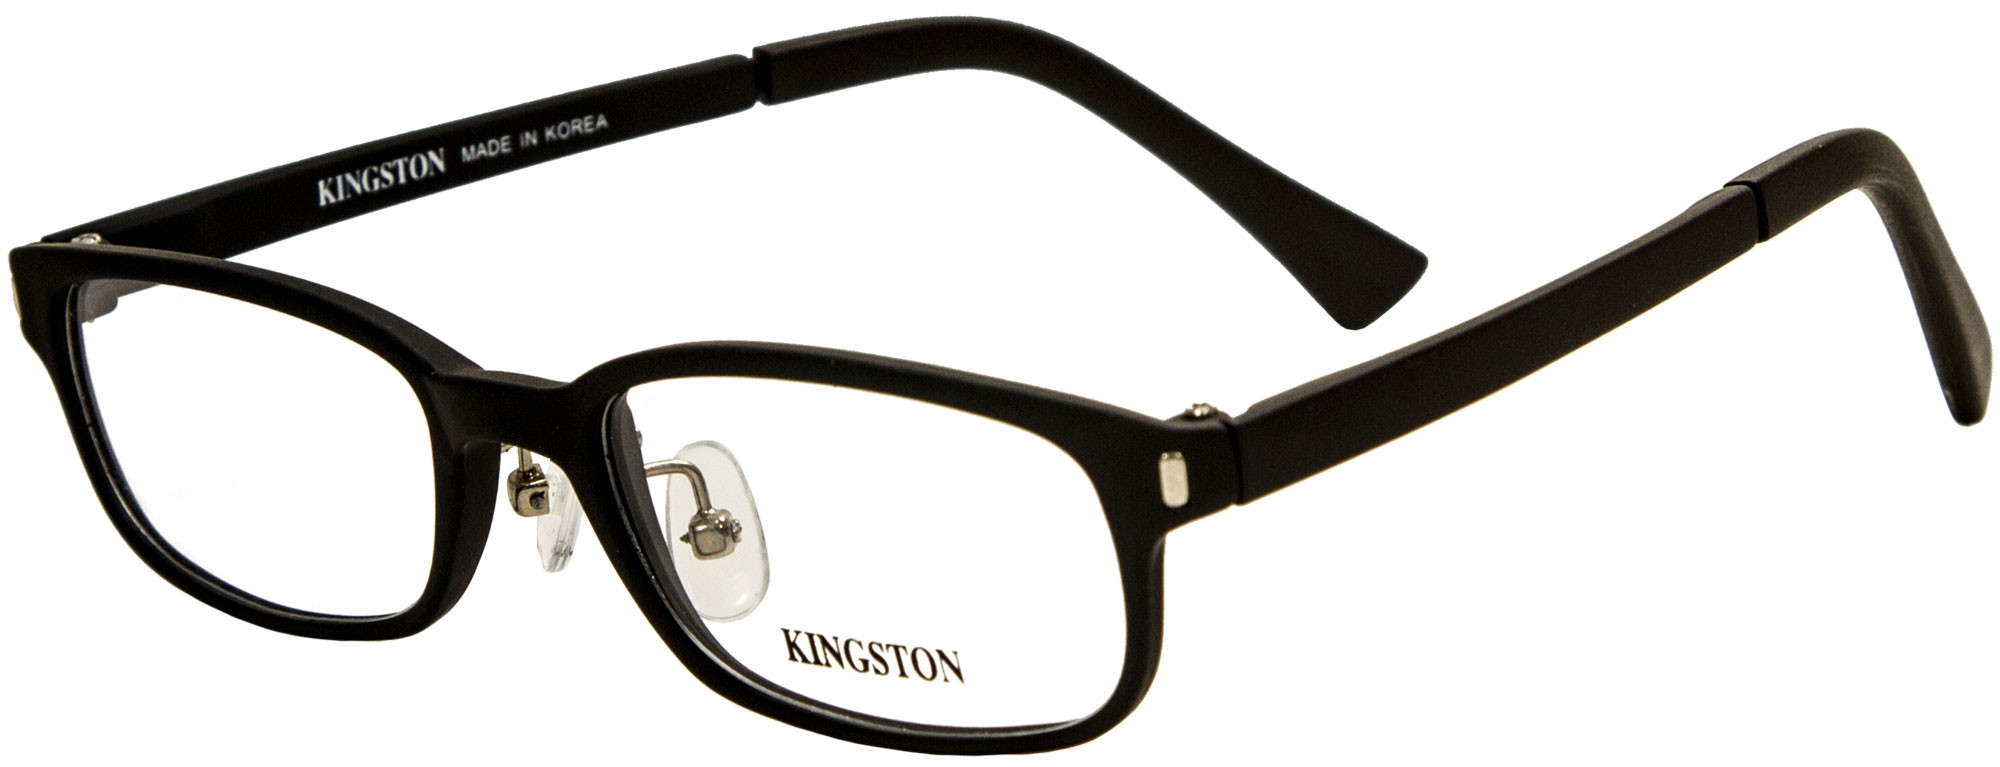 Kingston 3005 C6 2